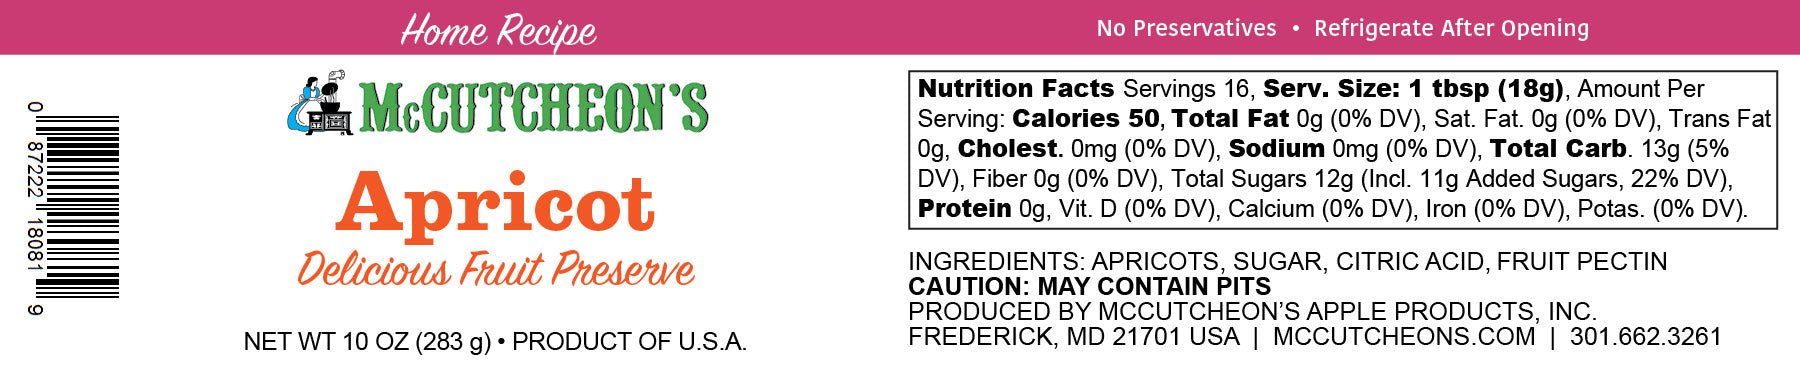 nutritional label for McCutcheon's mini Apricot Preserves